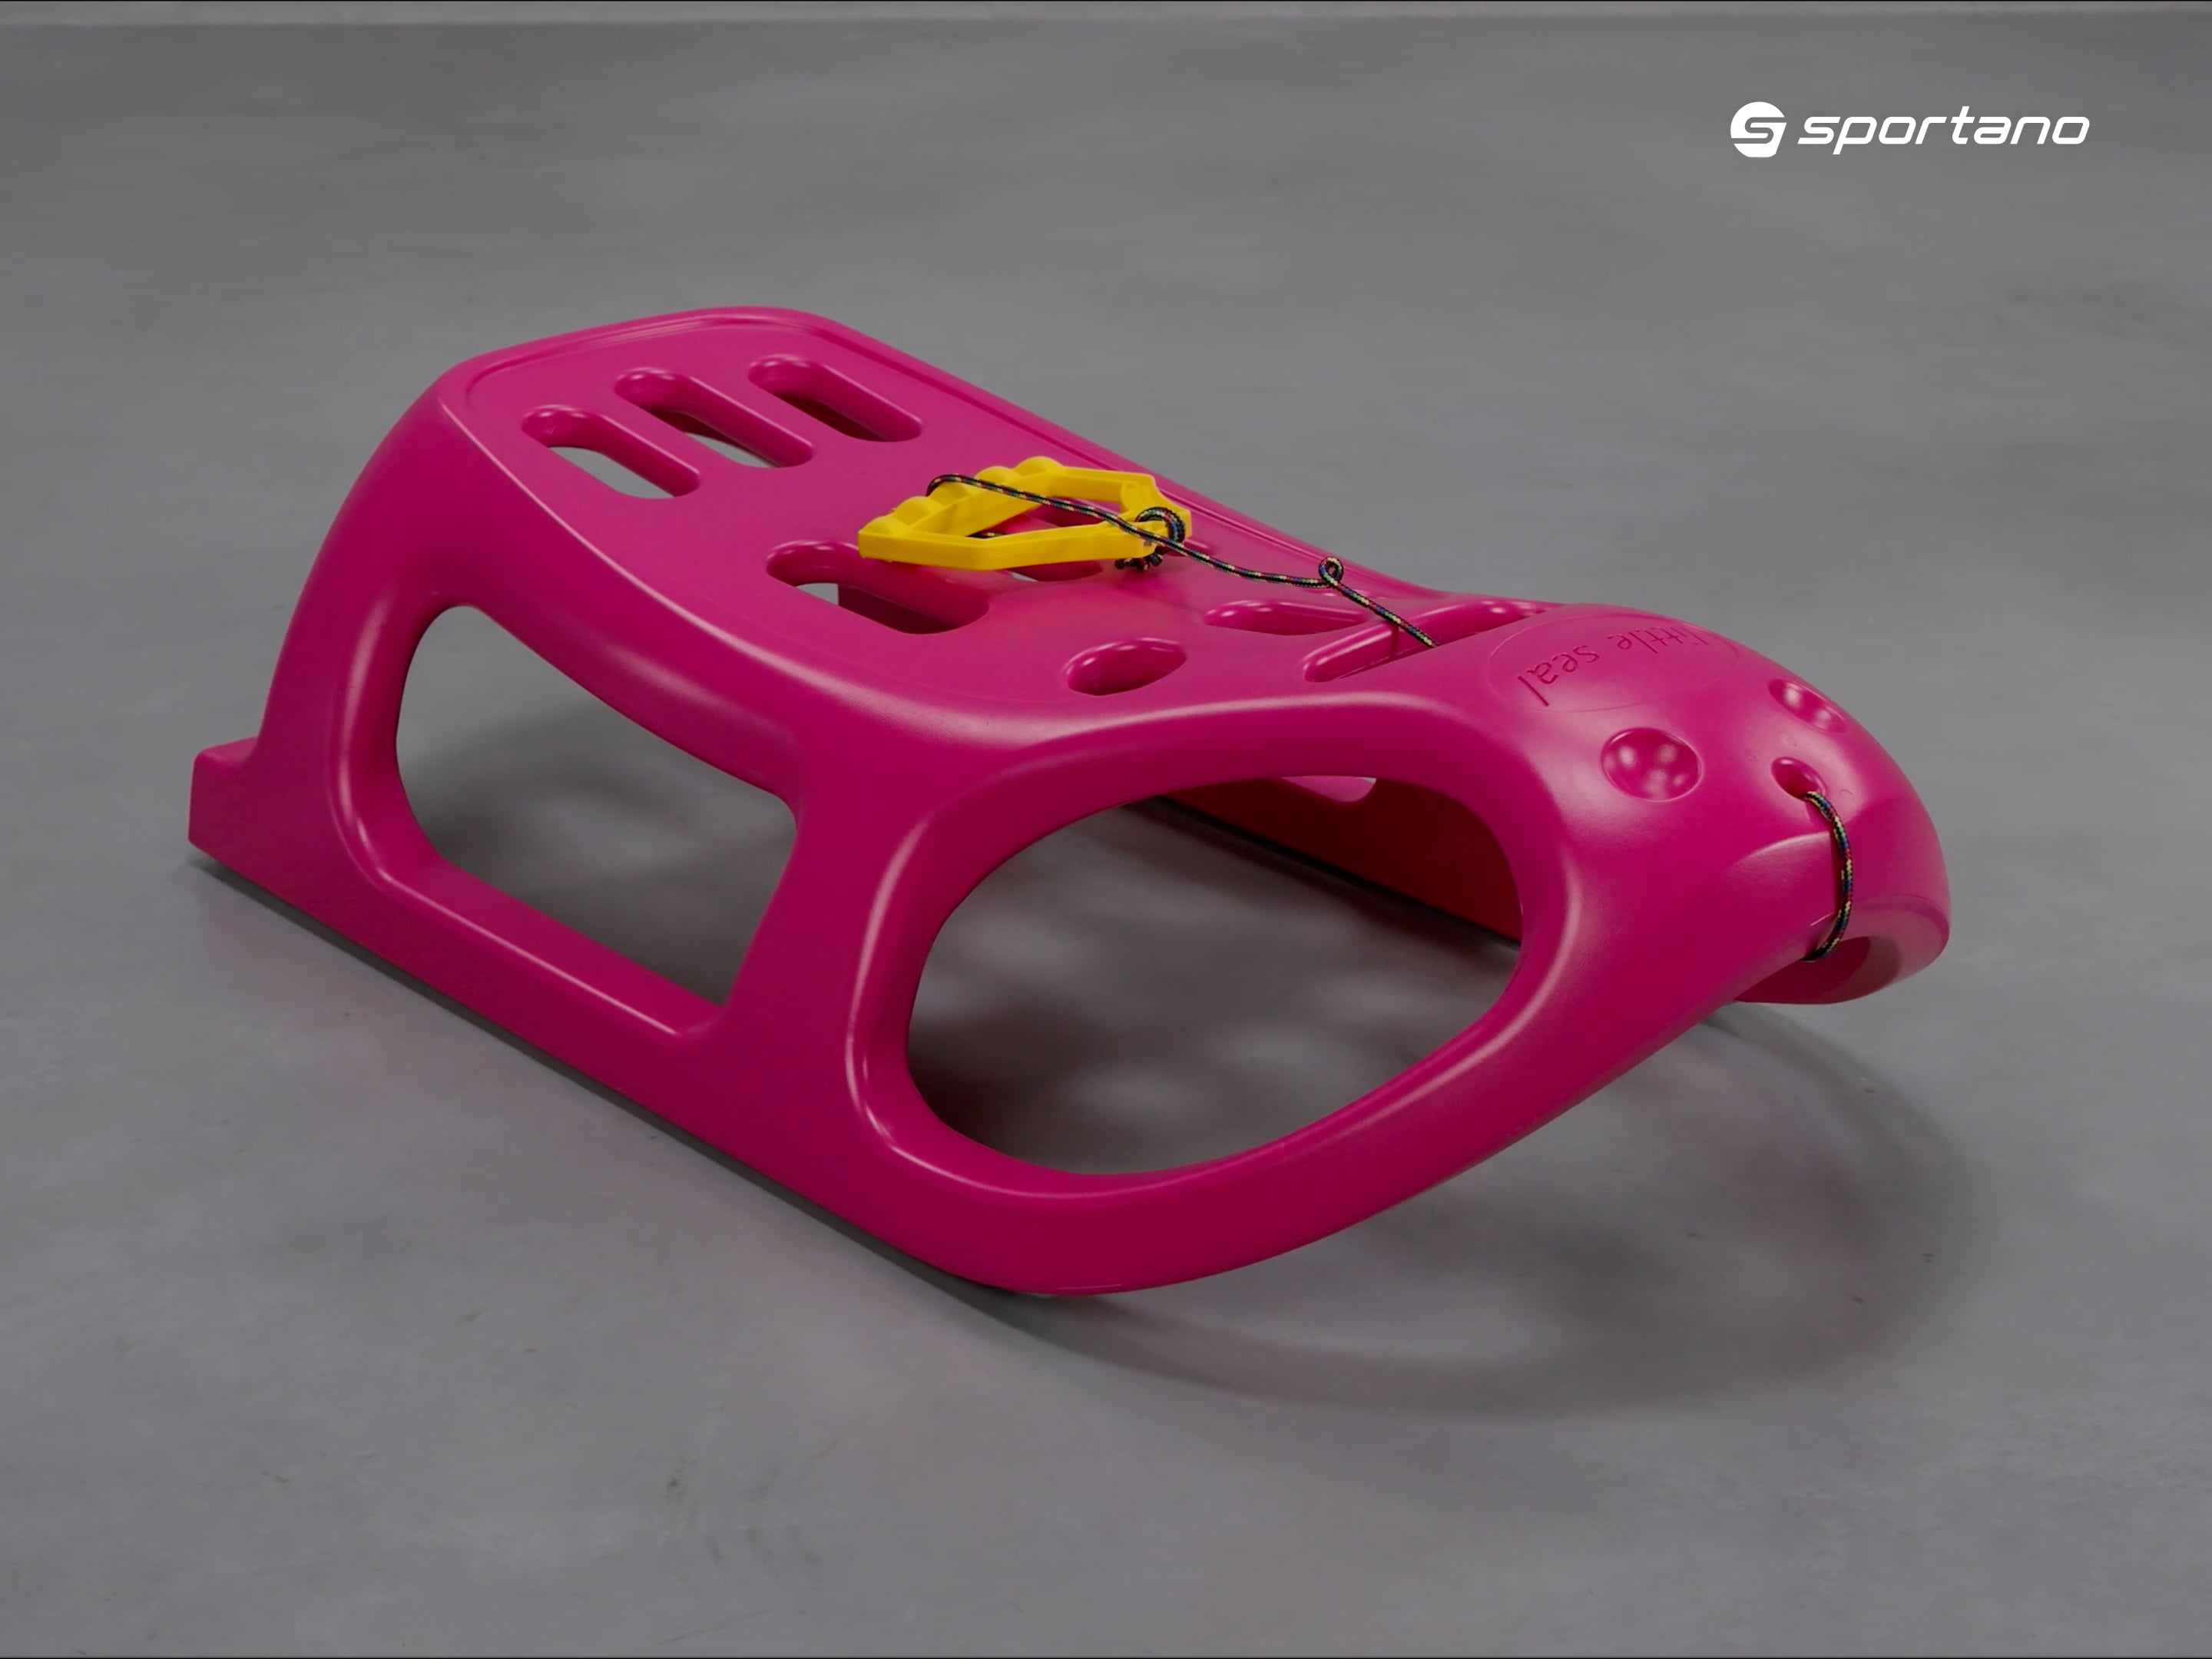 Prosperplast sled LITTLE SEAL pink ISBSEAL-205C